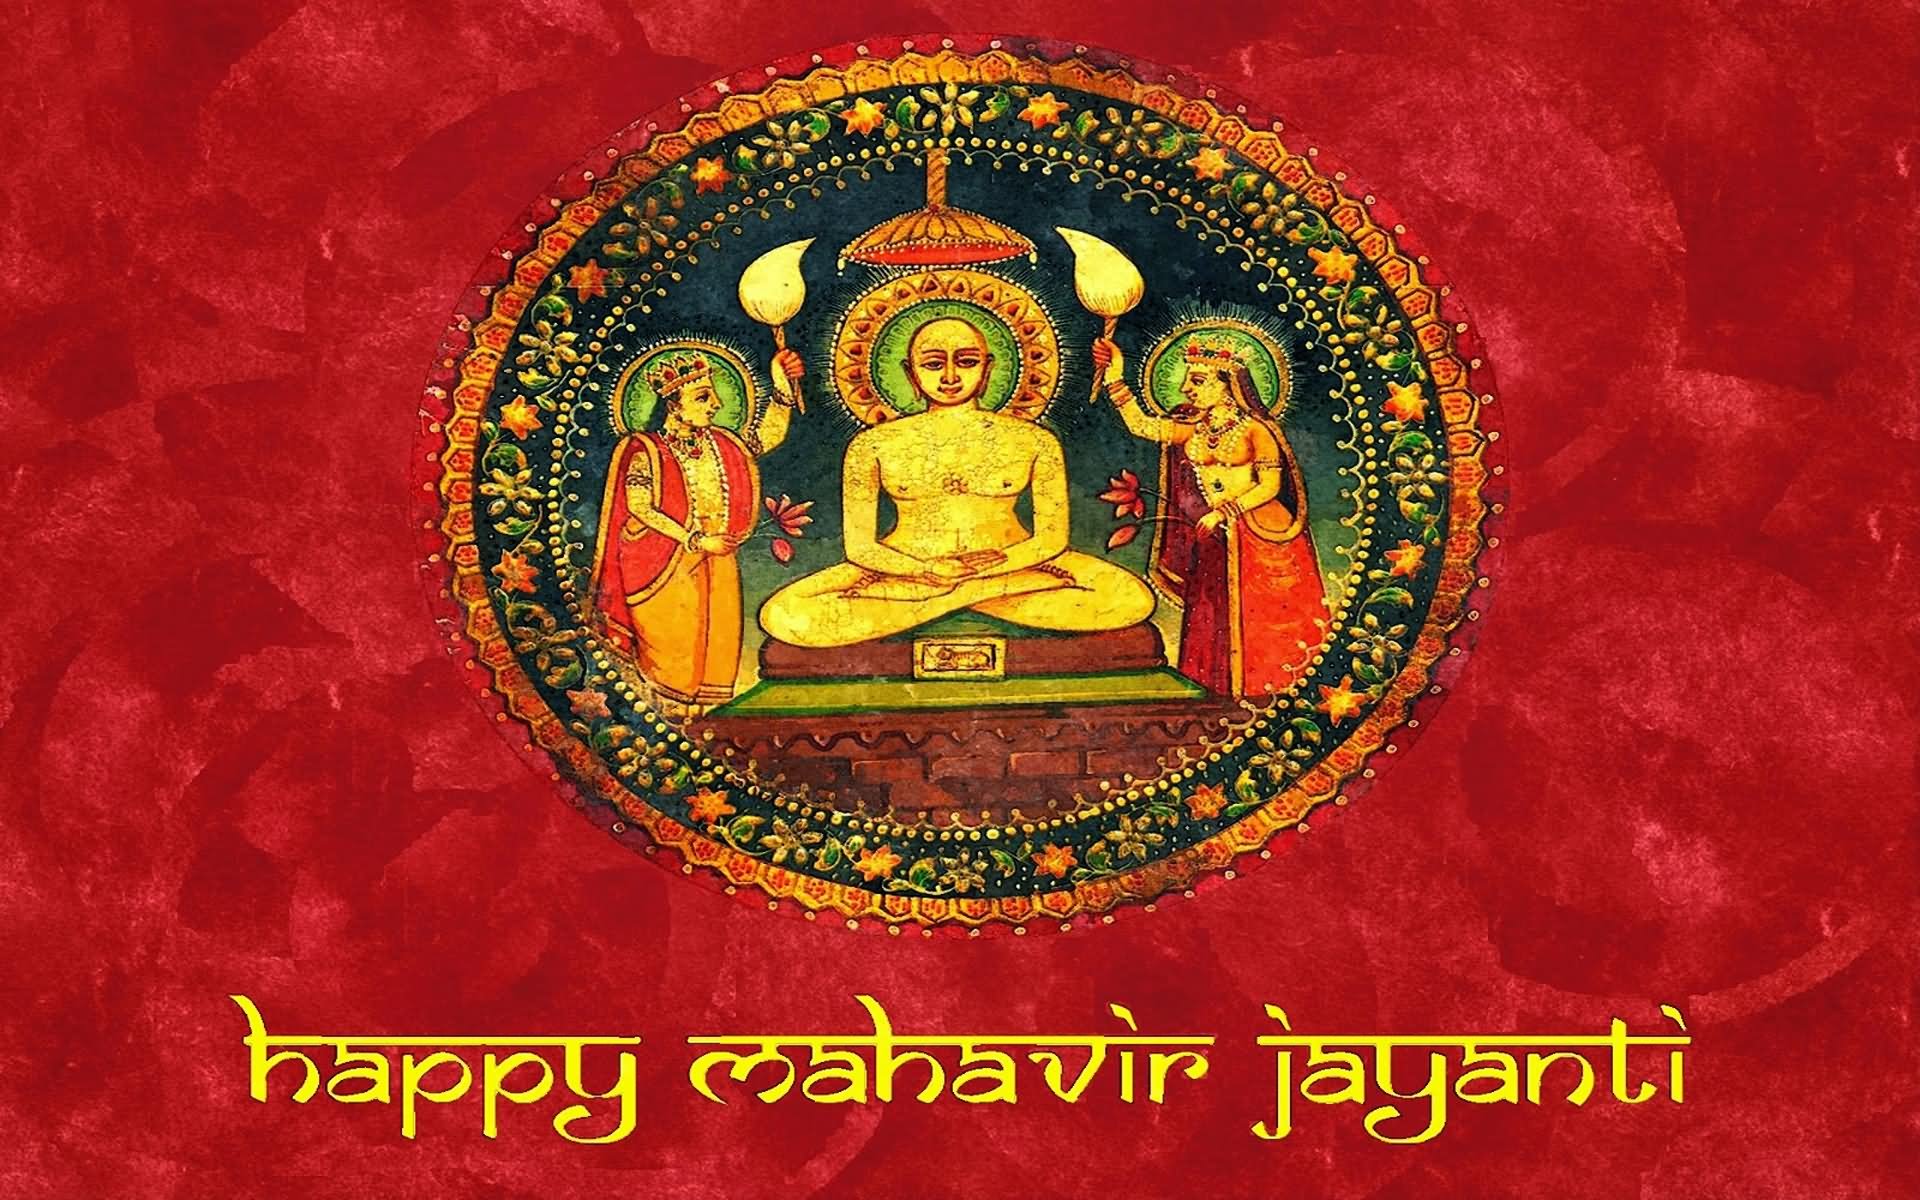 Happy Mahavir Jayanti Greeting Card Image